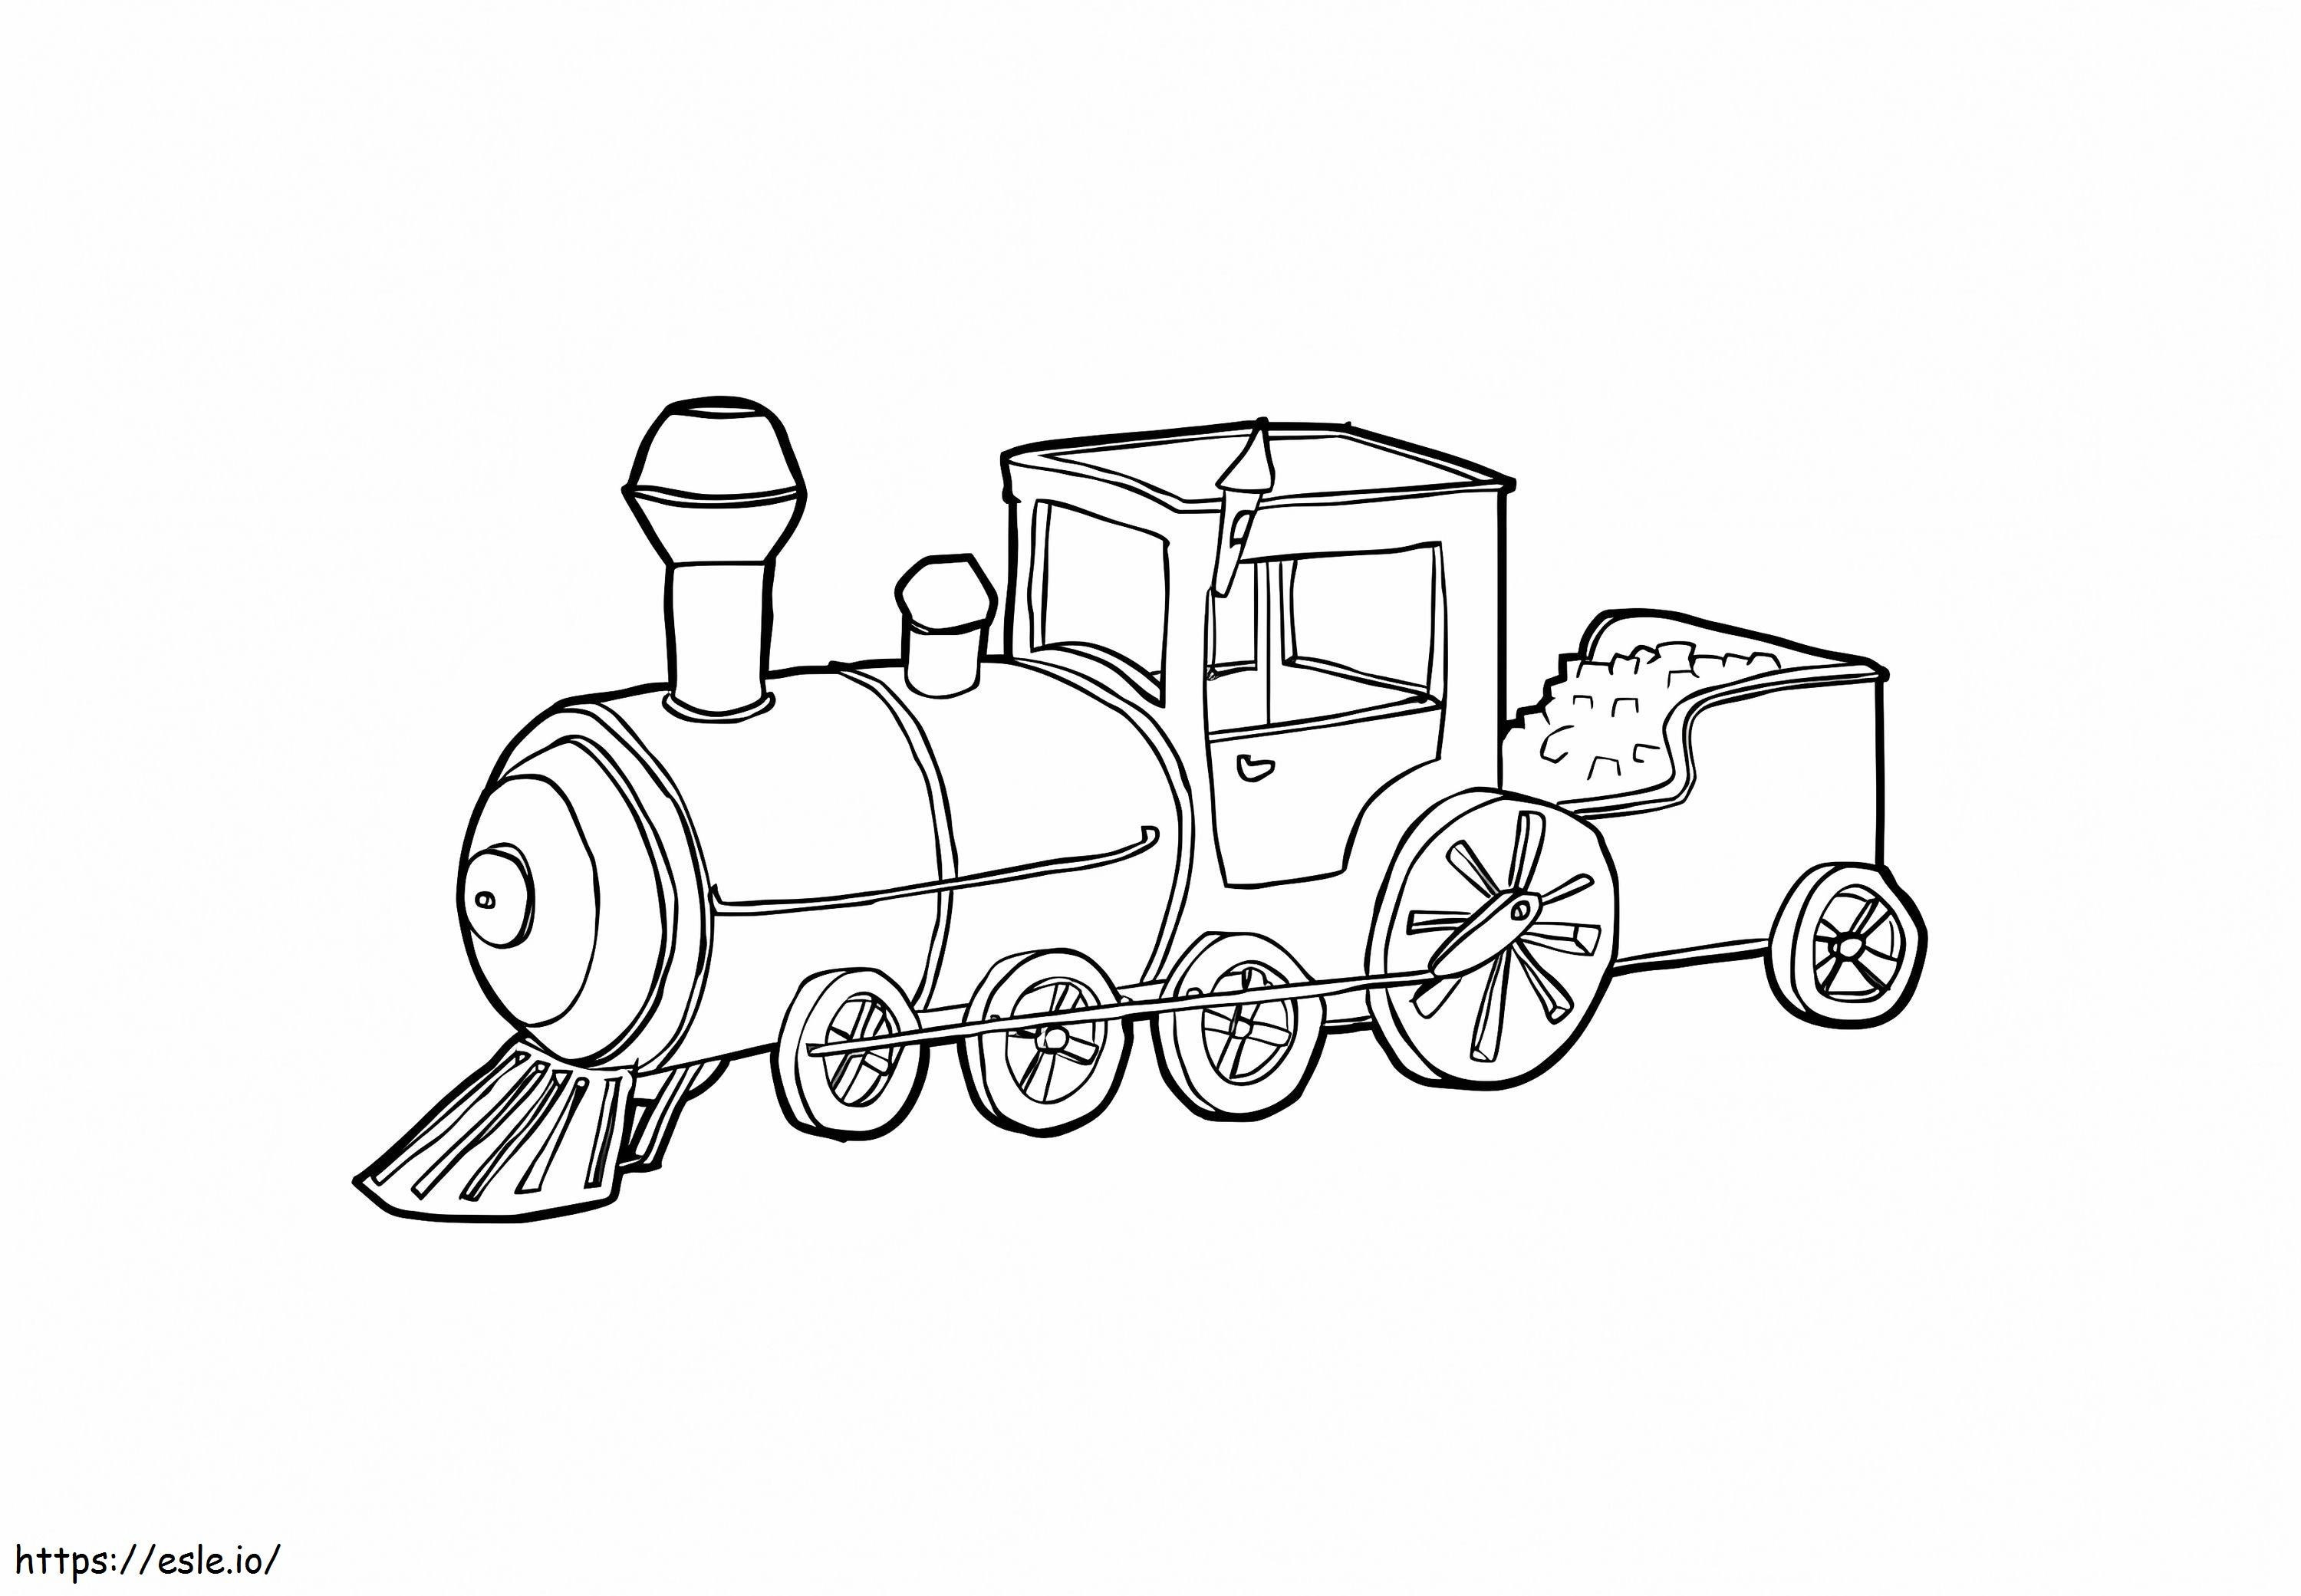 Motor de trem para colorir